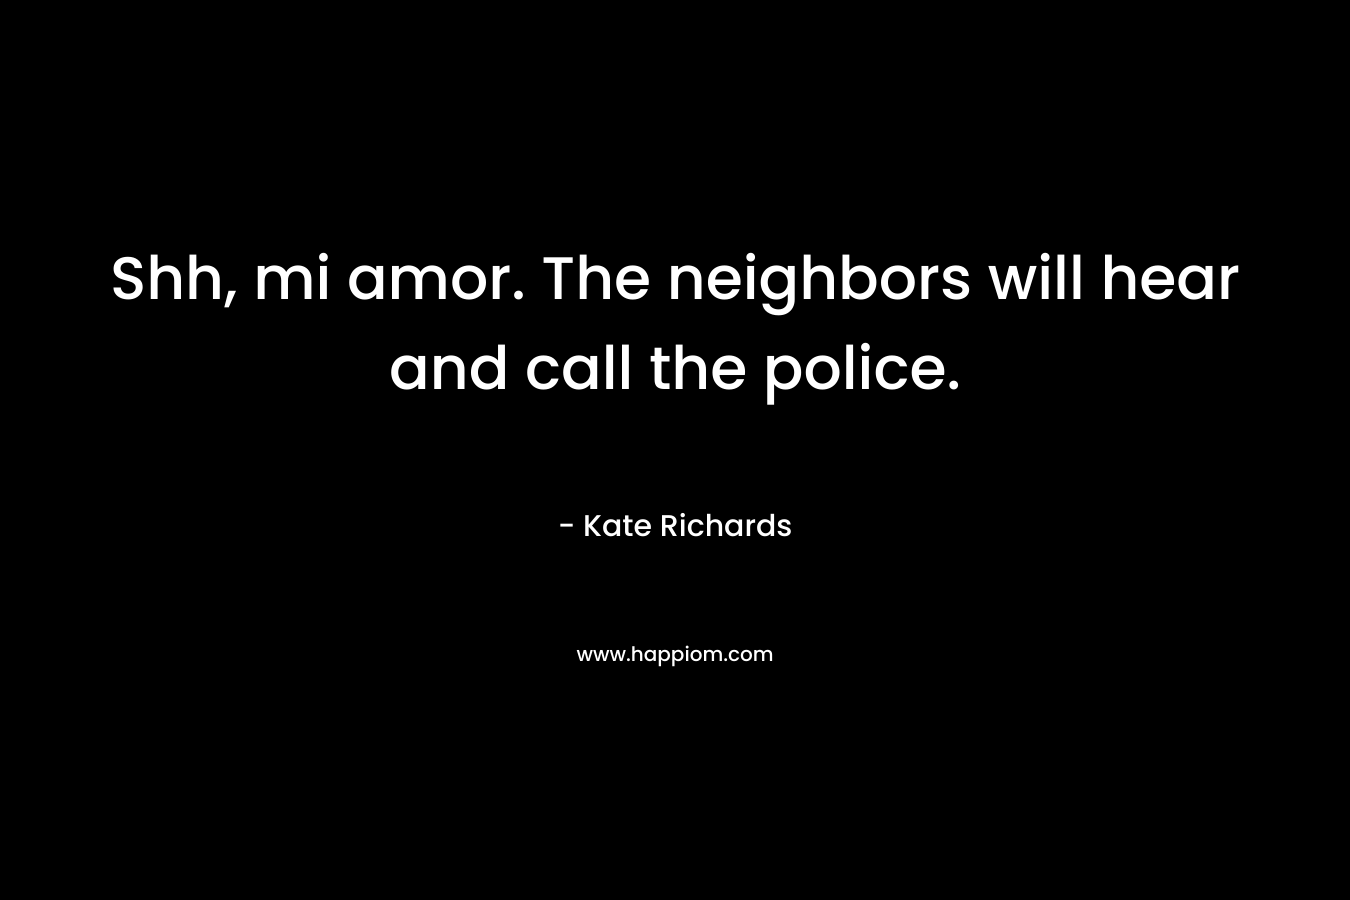 Shh, mi amor. The neighbors will hear and call the police.